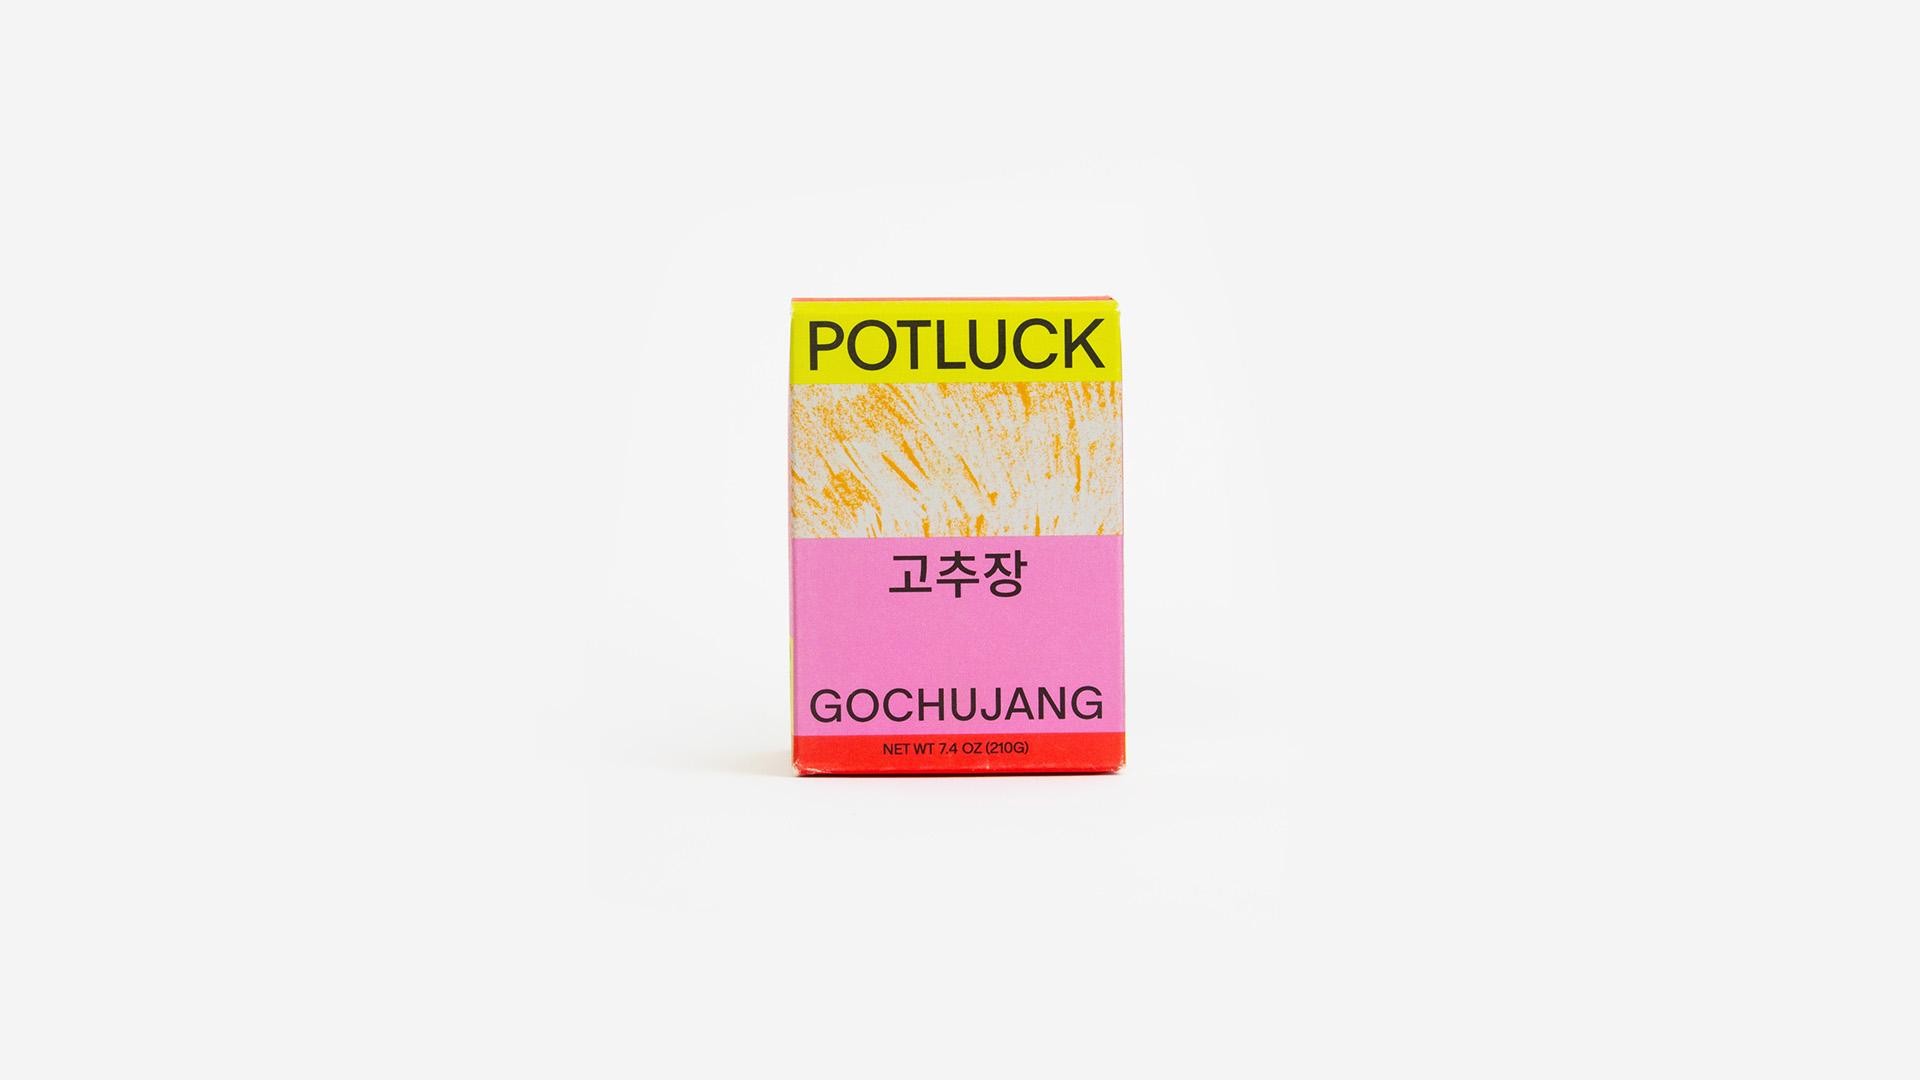 Potluck Gochujang